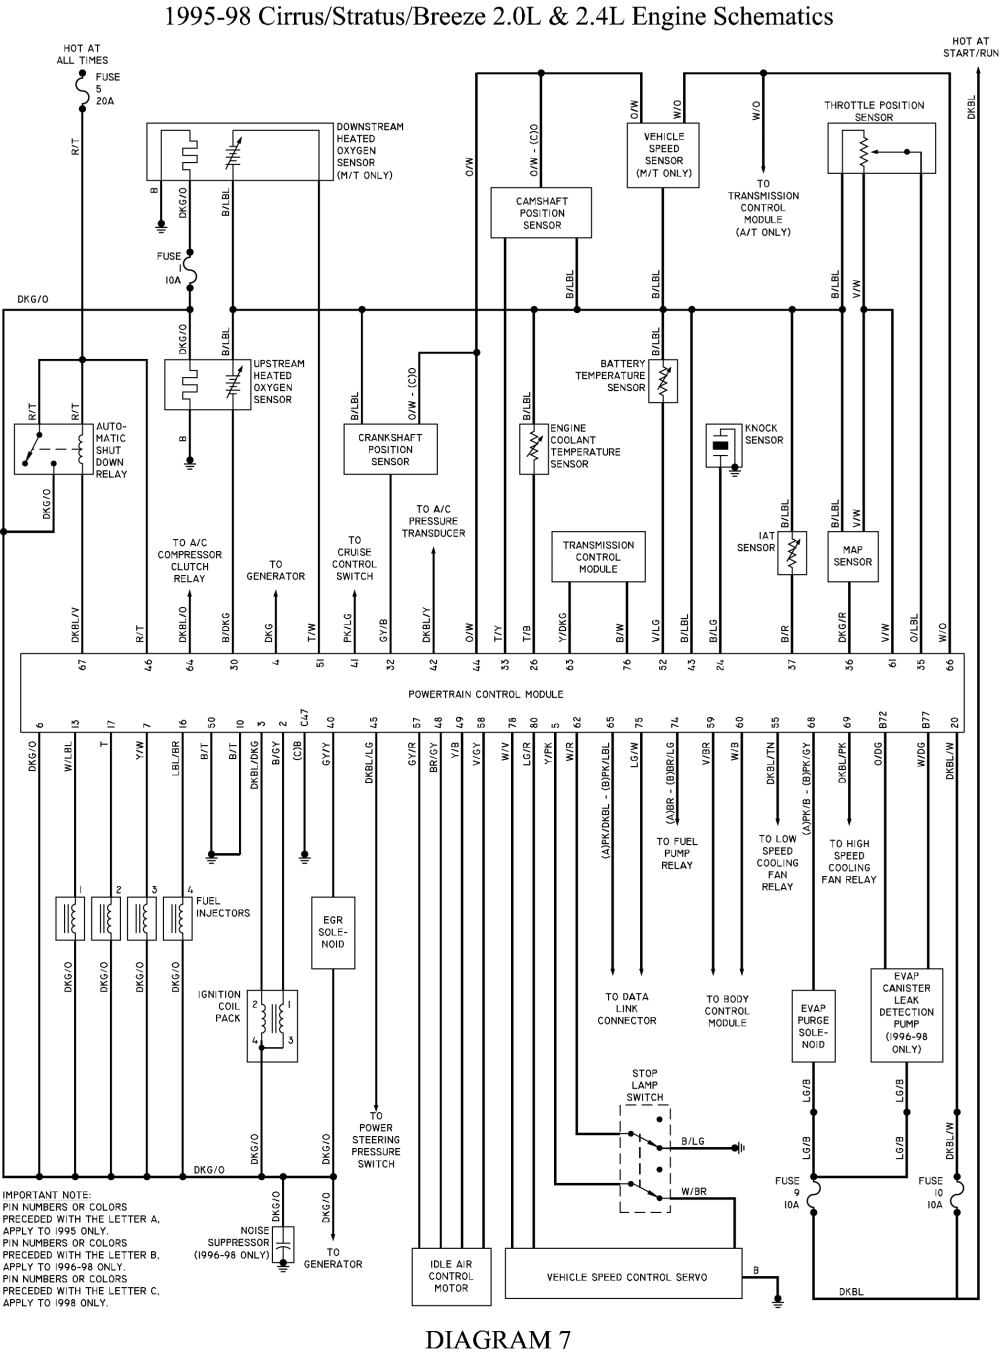 2002 Dodge Caravan Factory Radio Wiring Diagram Full Hd Version Wiring Diagram Loki Diagram Origineworkingaussies Fr